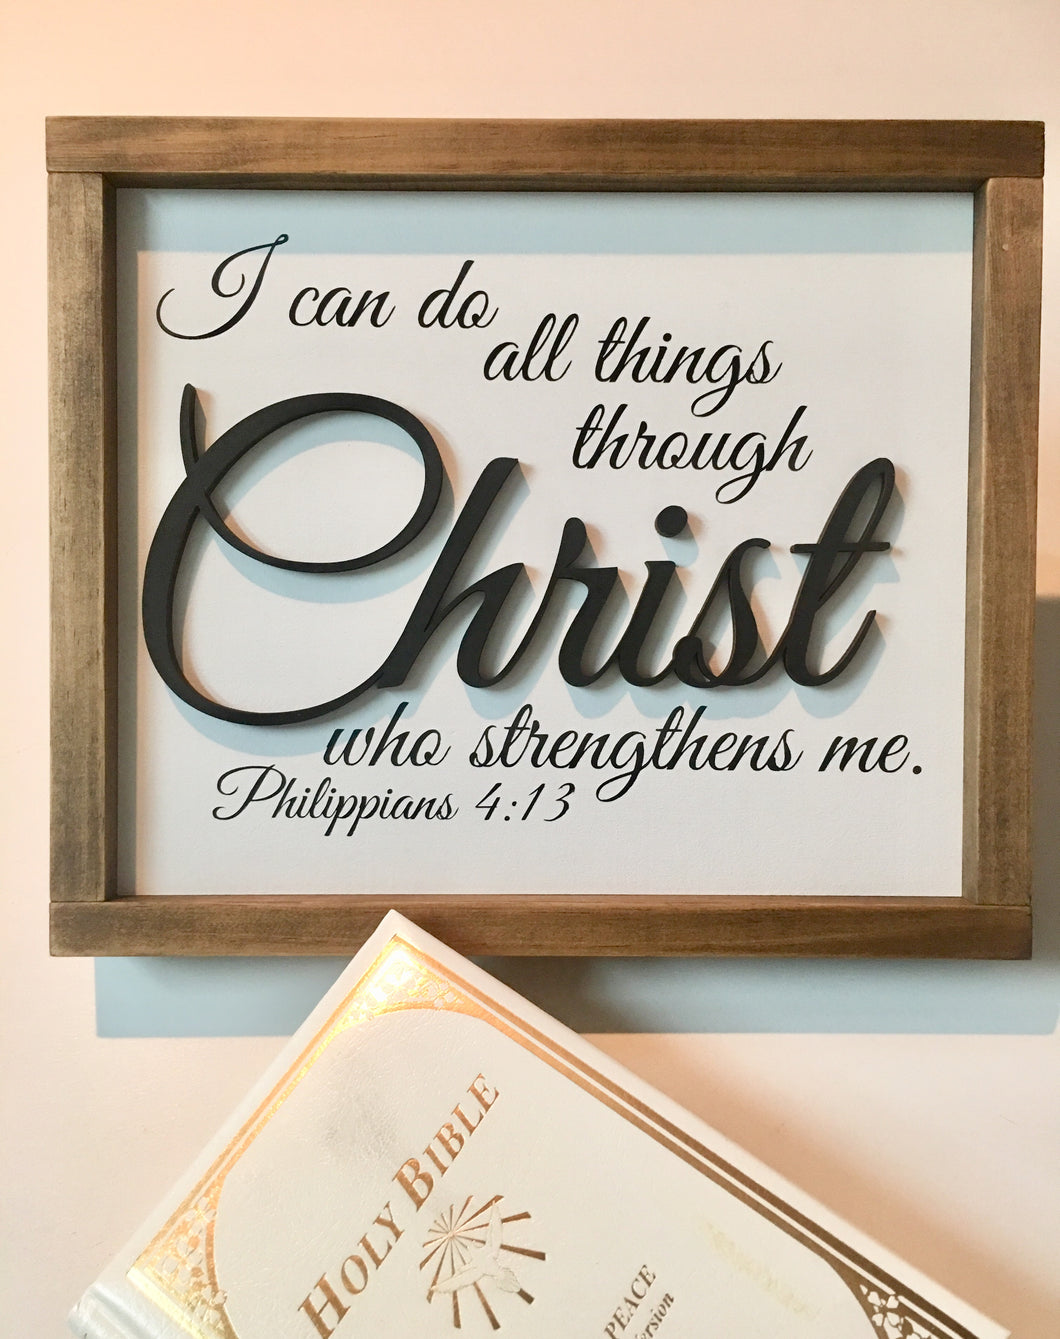 Philippians 4:13 Framed Sign